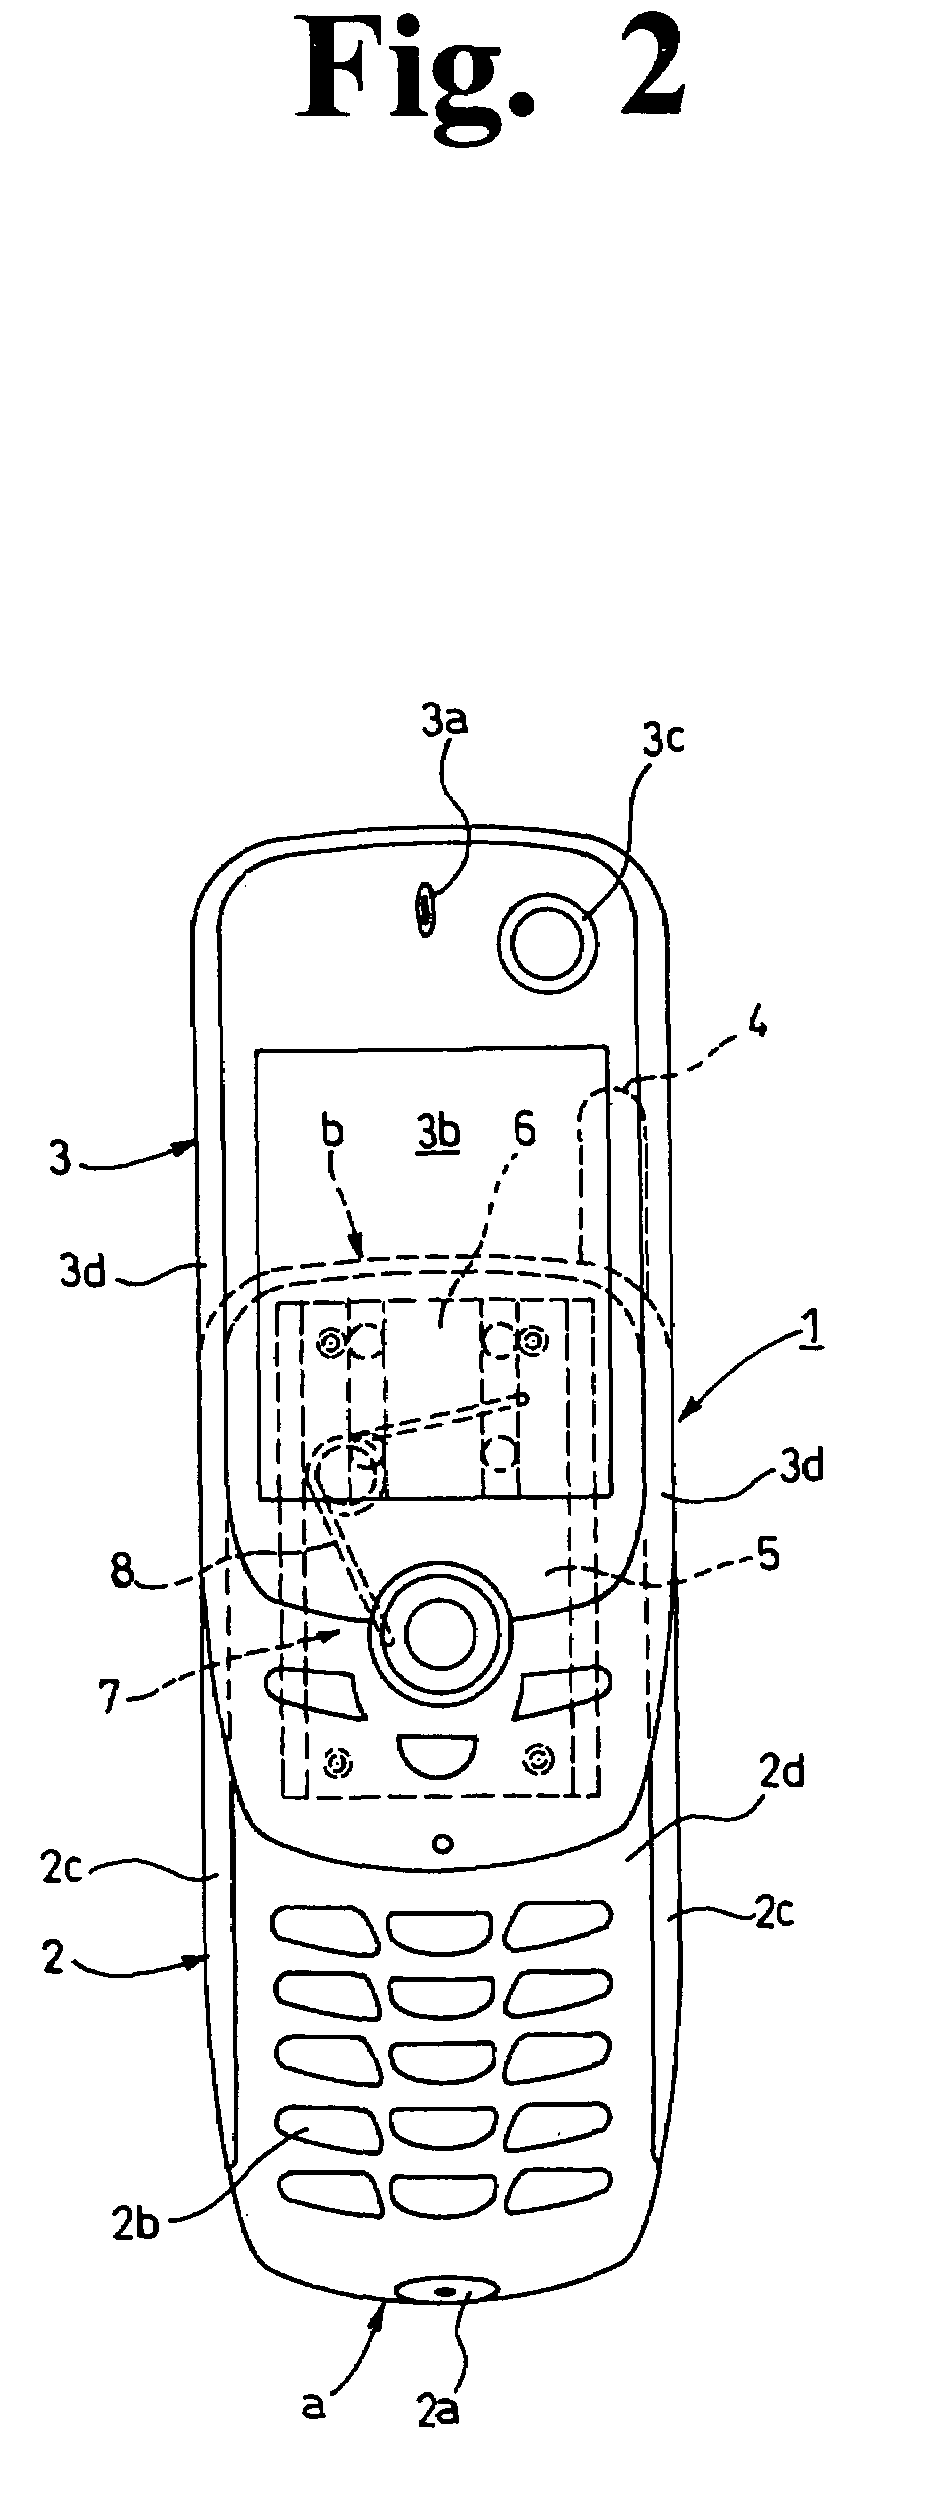 Slide mechanism of portable terminal device